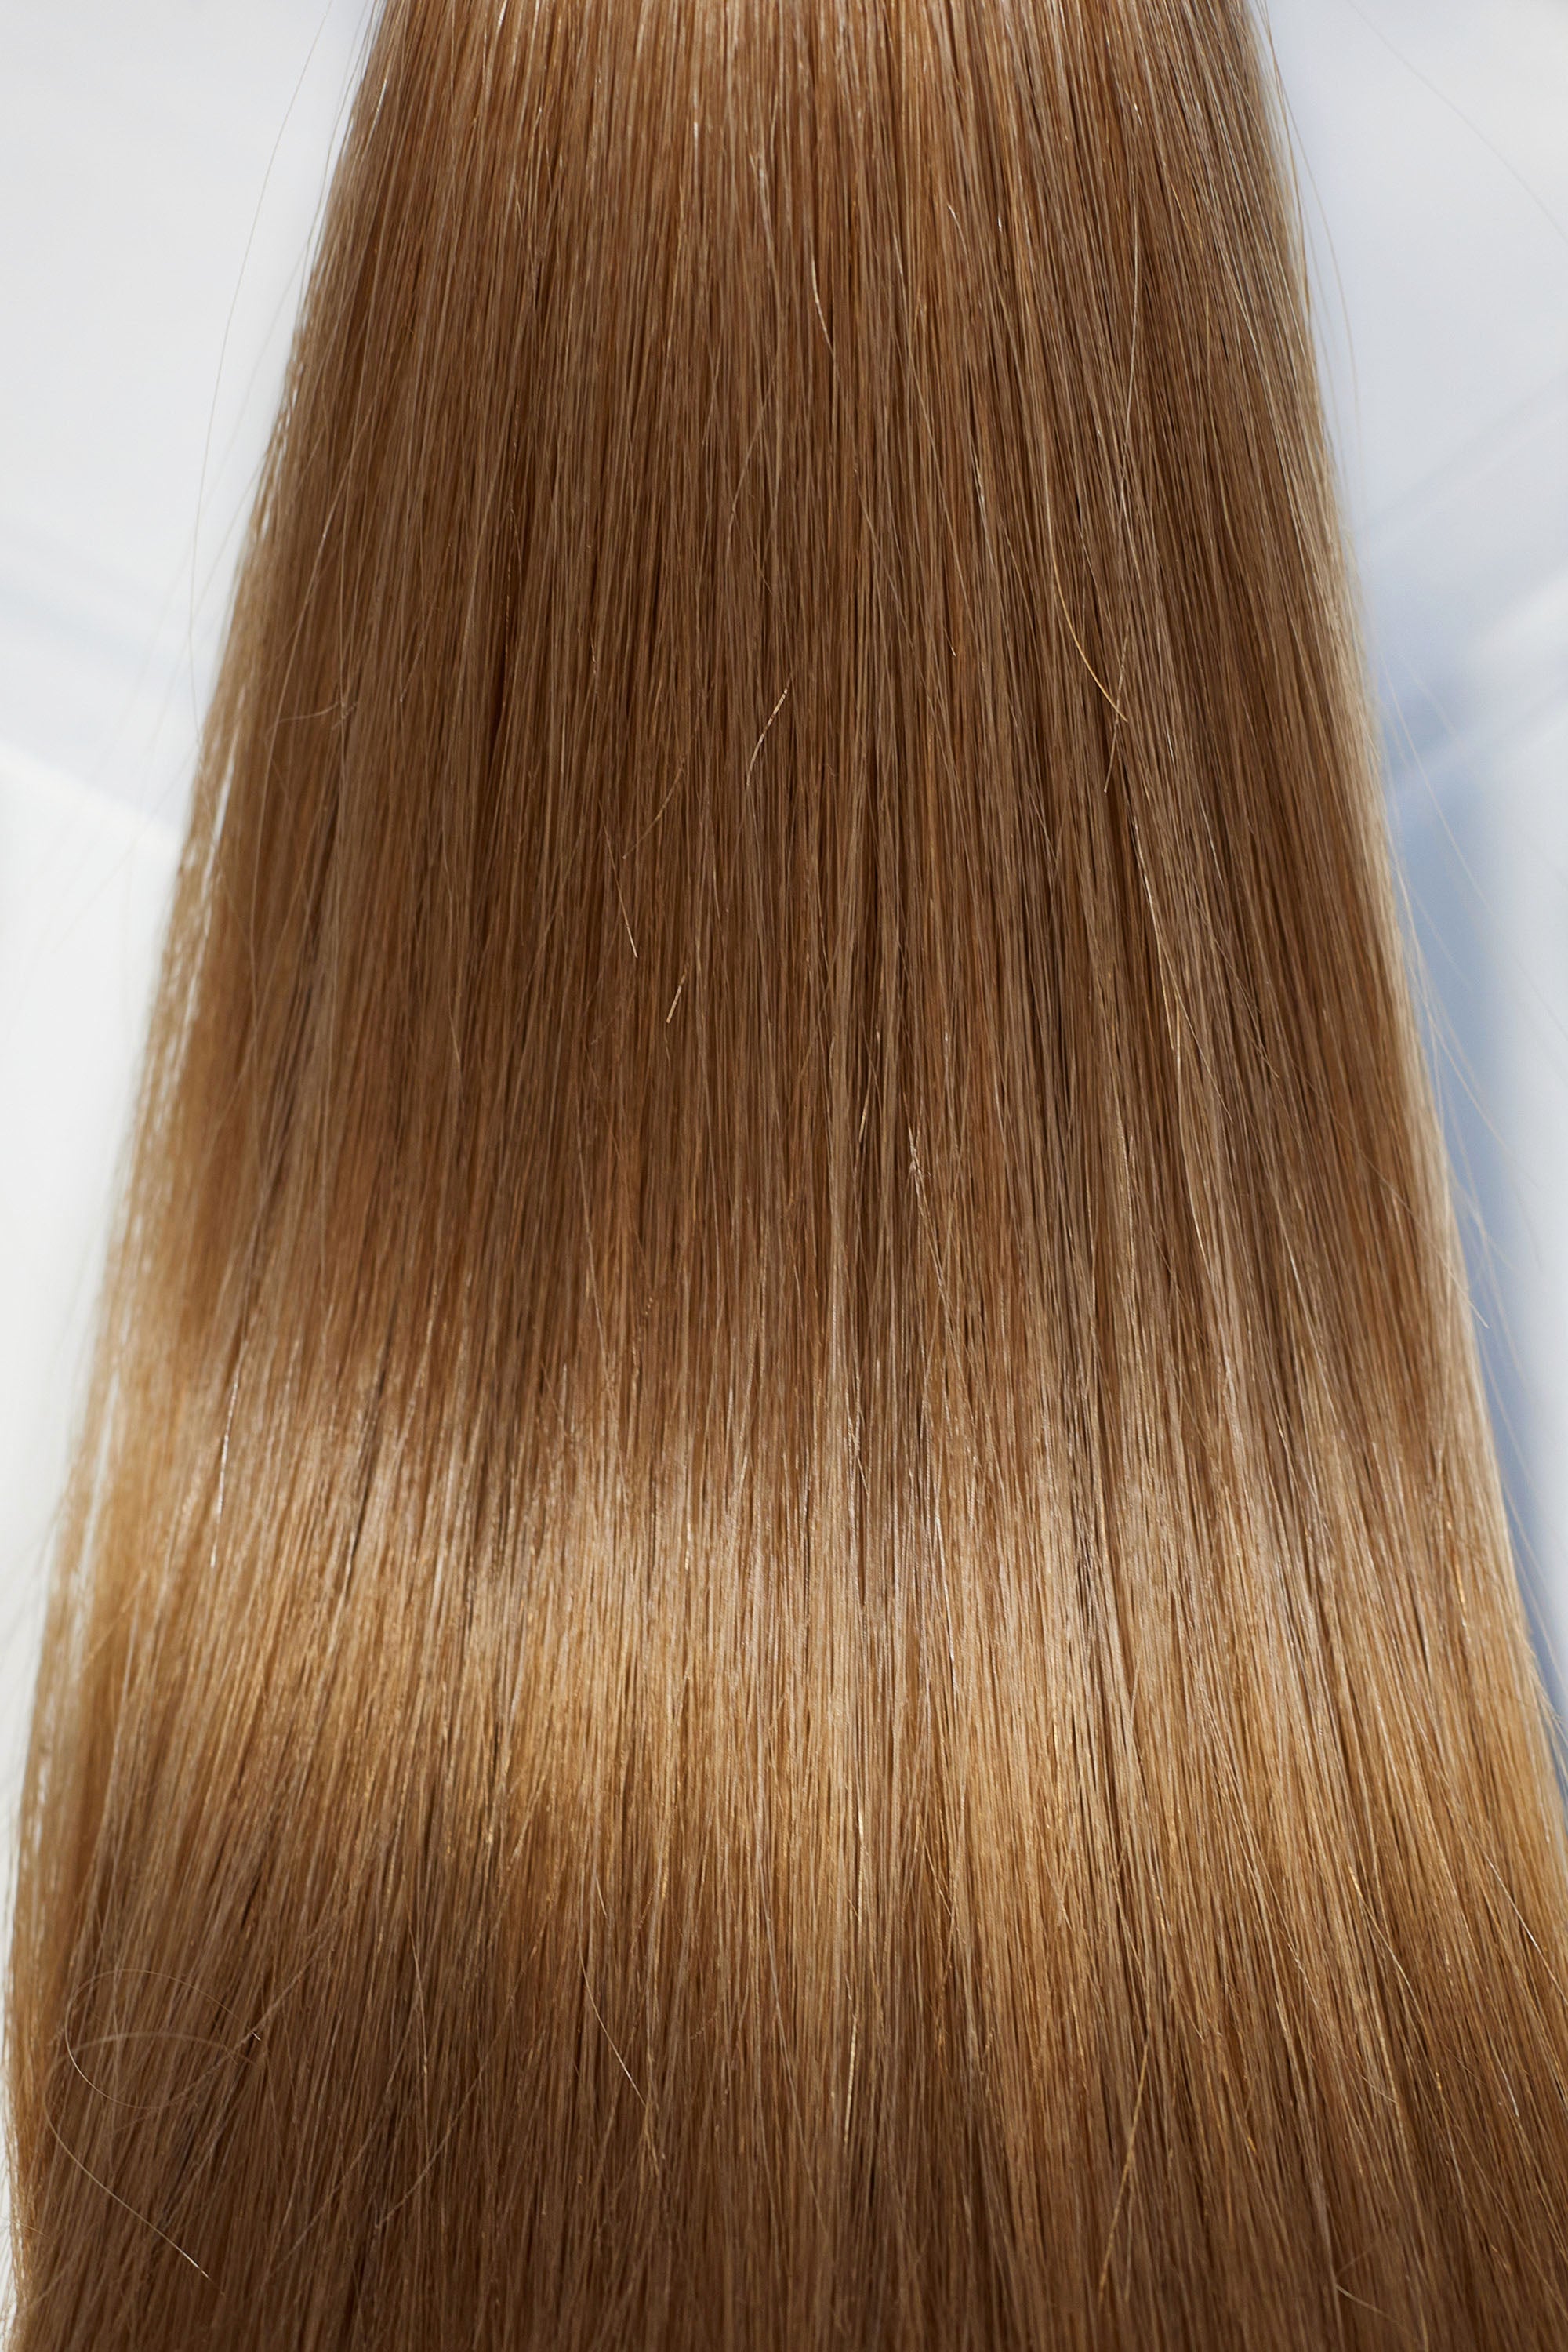 Behair professional Keratin Tip "Premium" 16" (40cm) Natural Straight Caramel Brown #8 - 25g (Micro - 0.5g each pcs) hair extensions